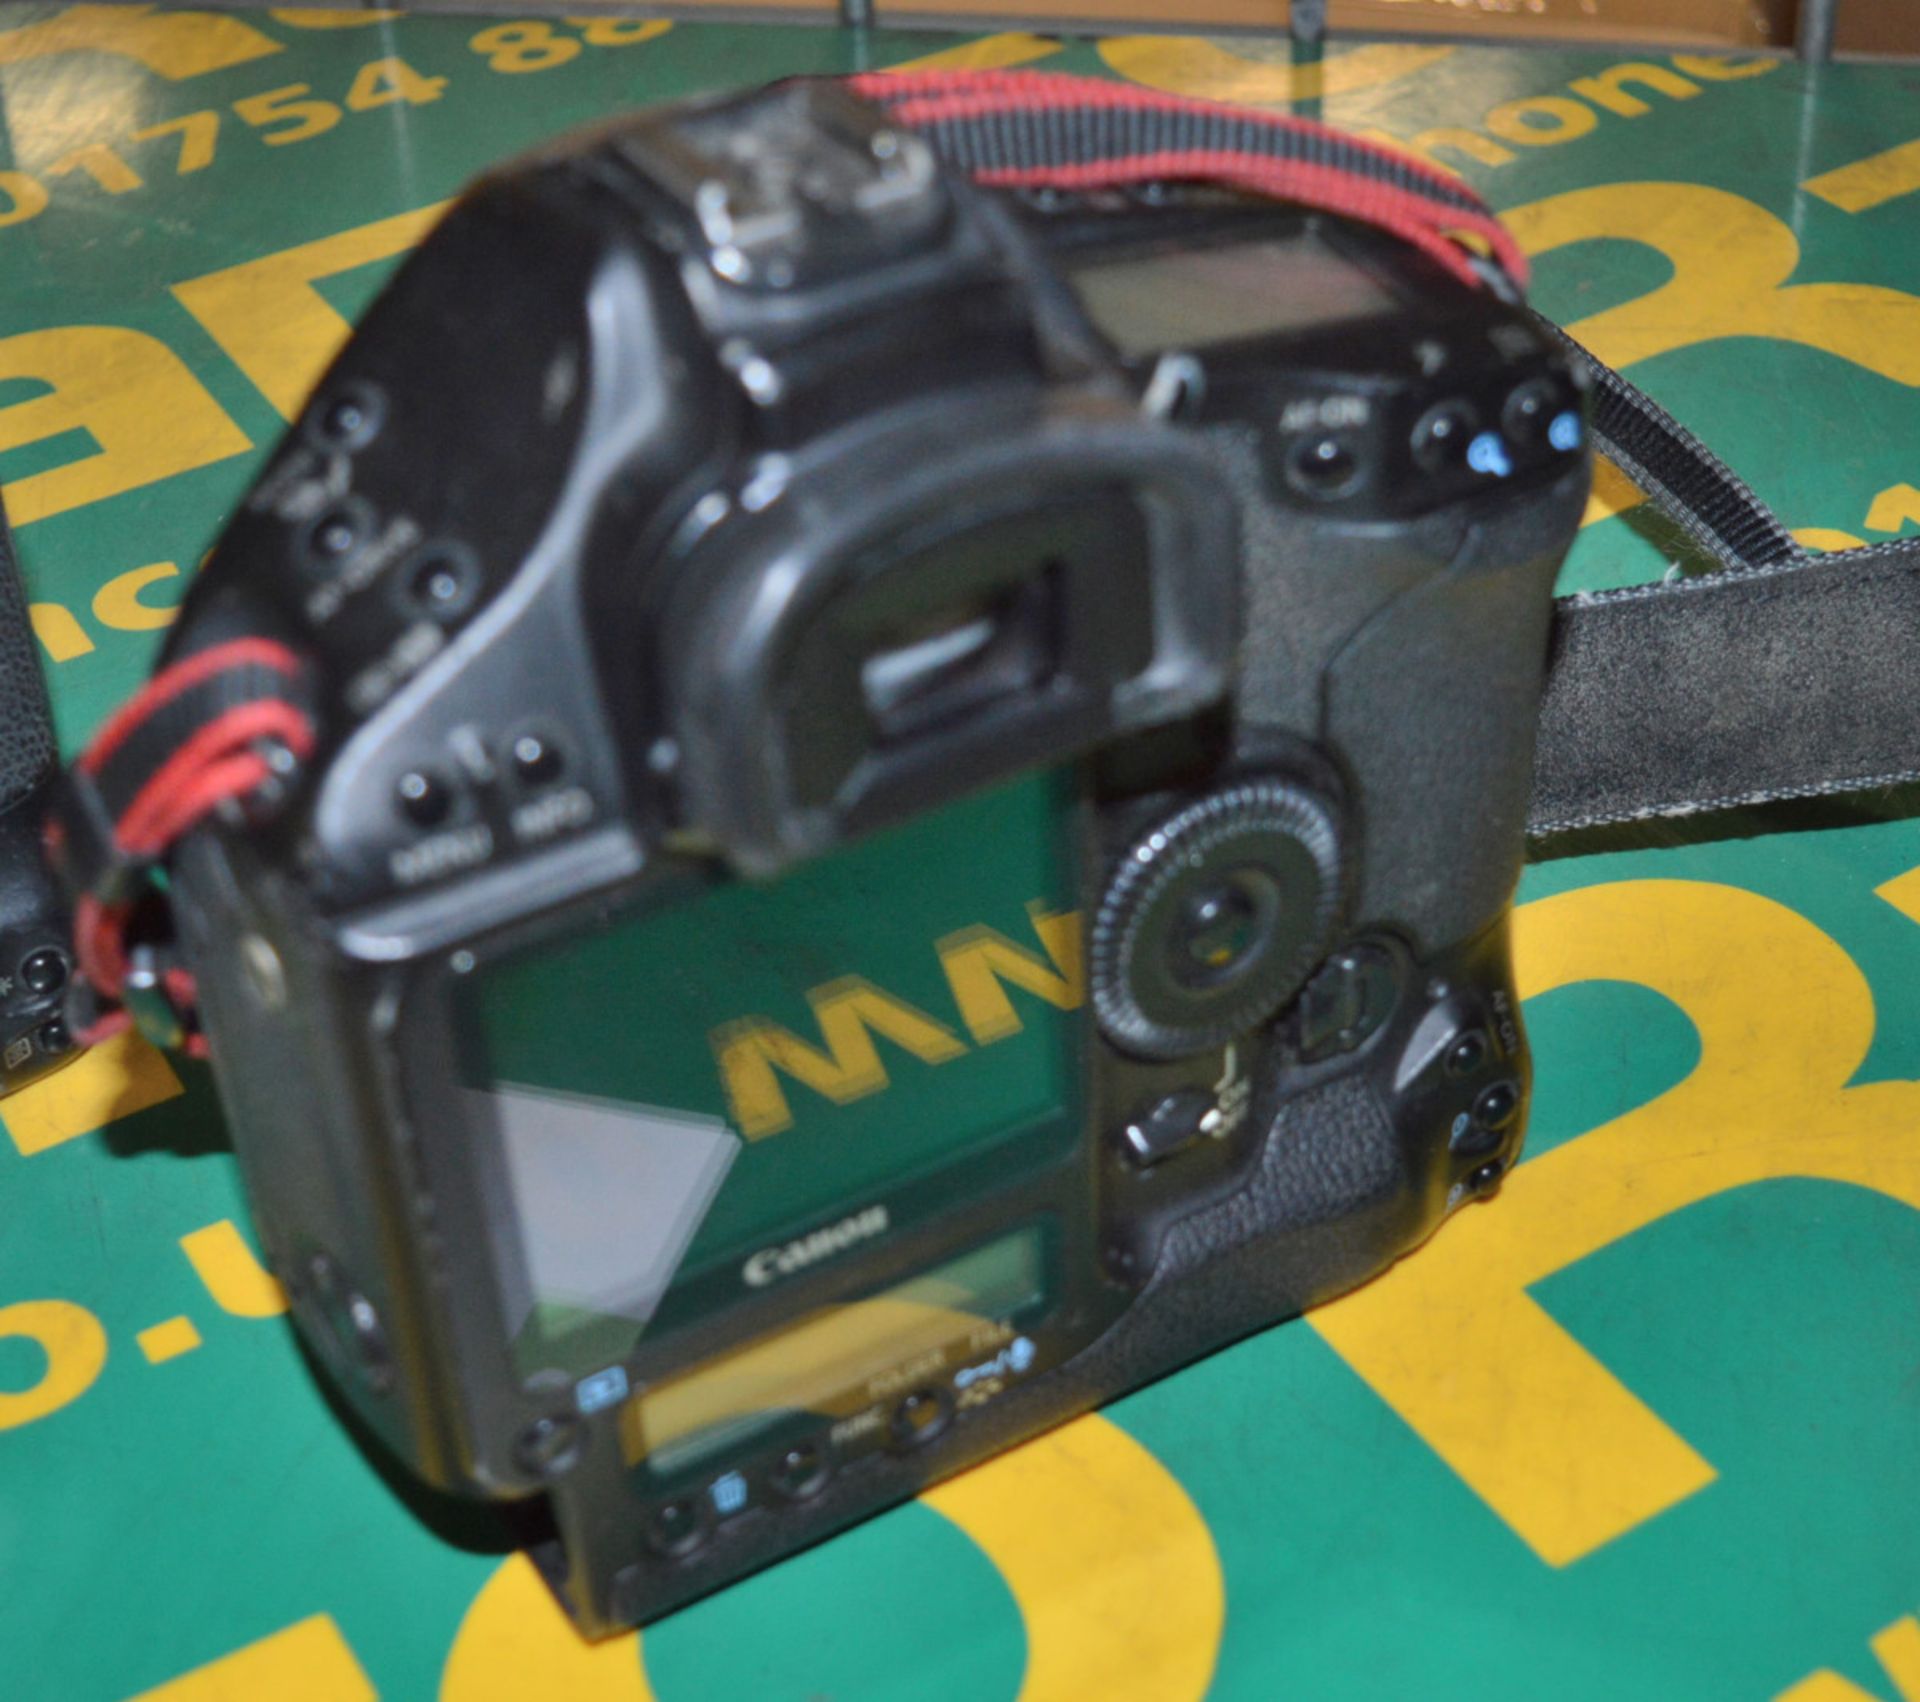 Canon EOS-1 Digital Camera Body - No Battery - Image 3 of 3